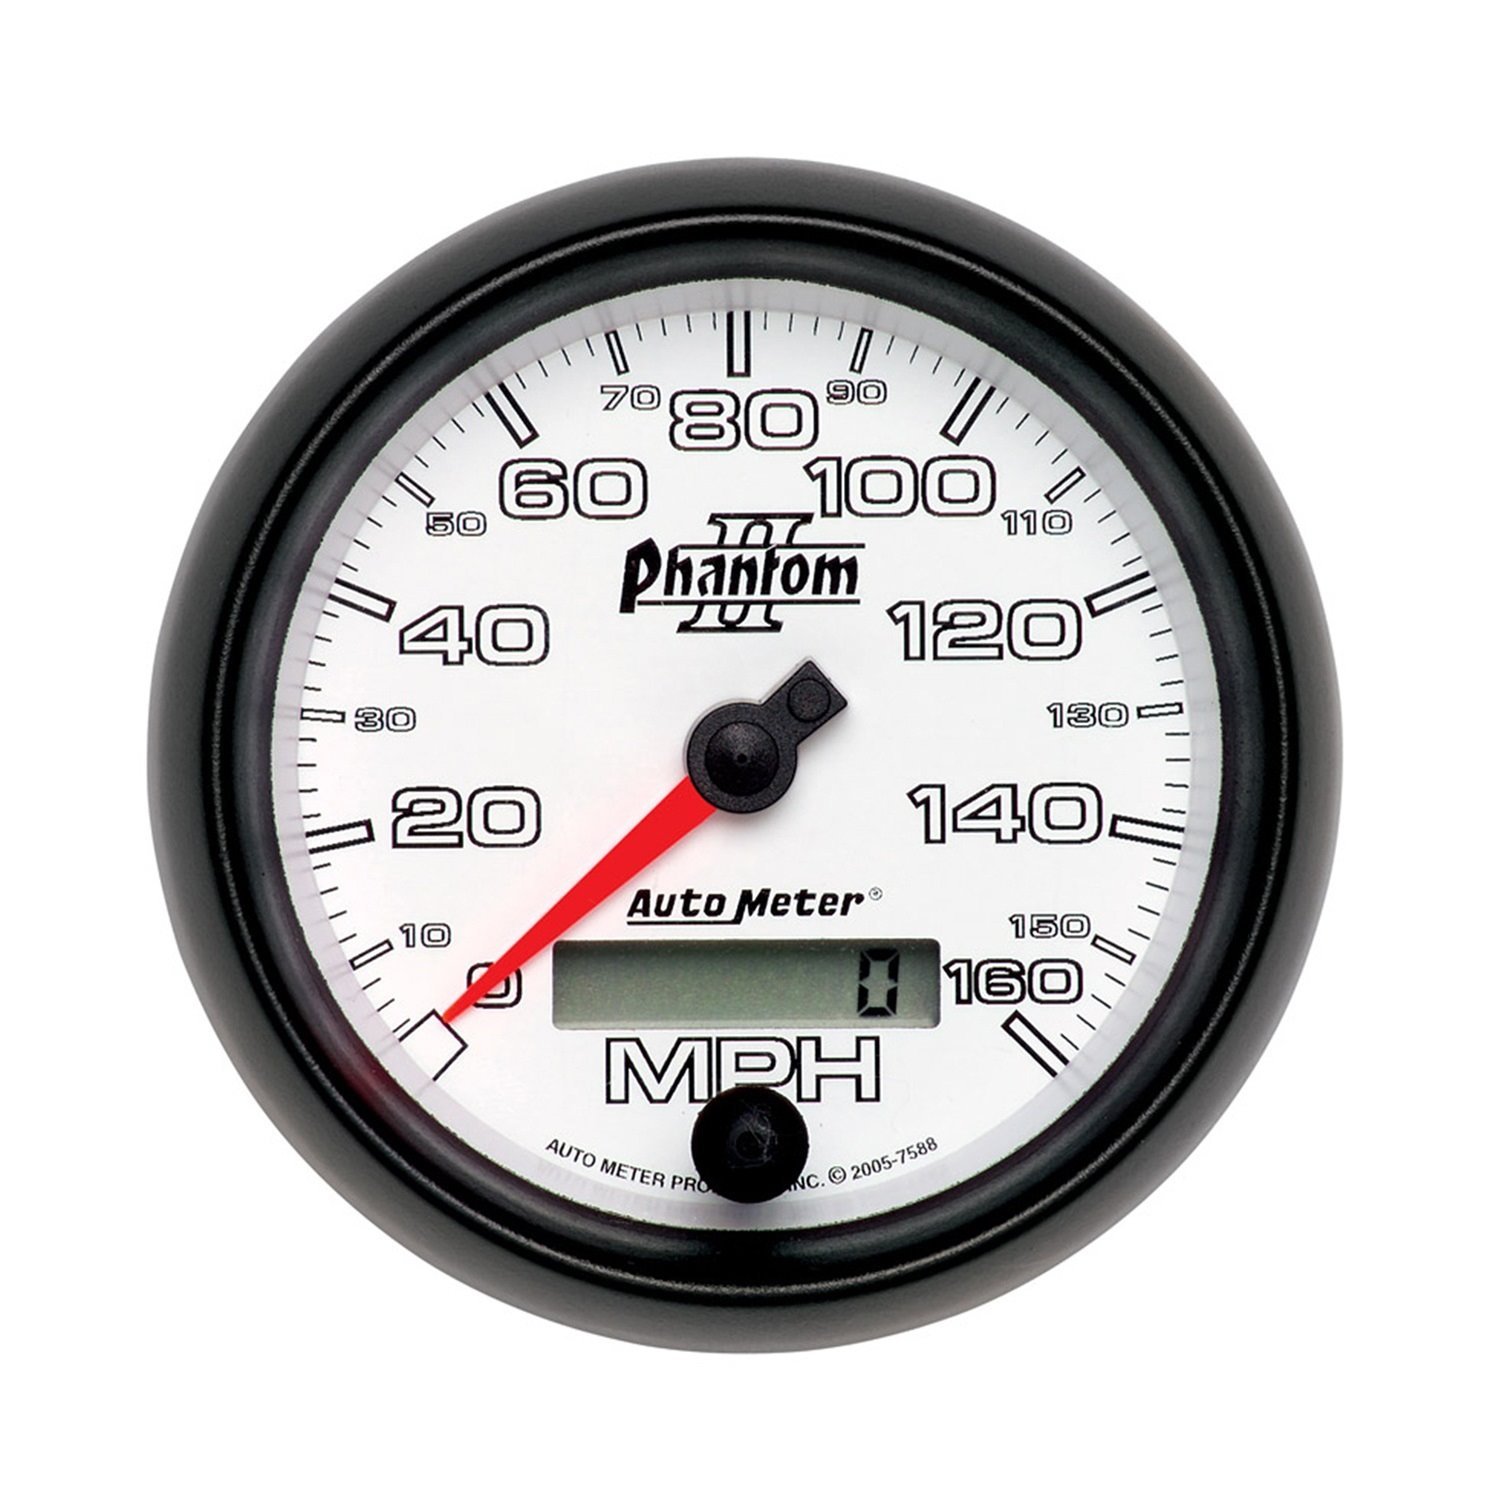 Phantom II Speedometer 3-3/8" Electrical